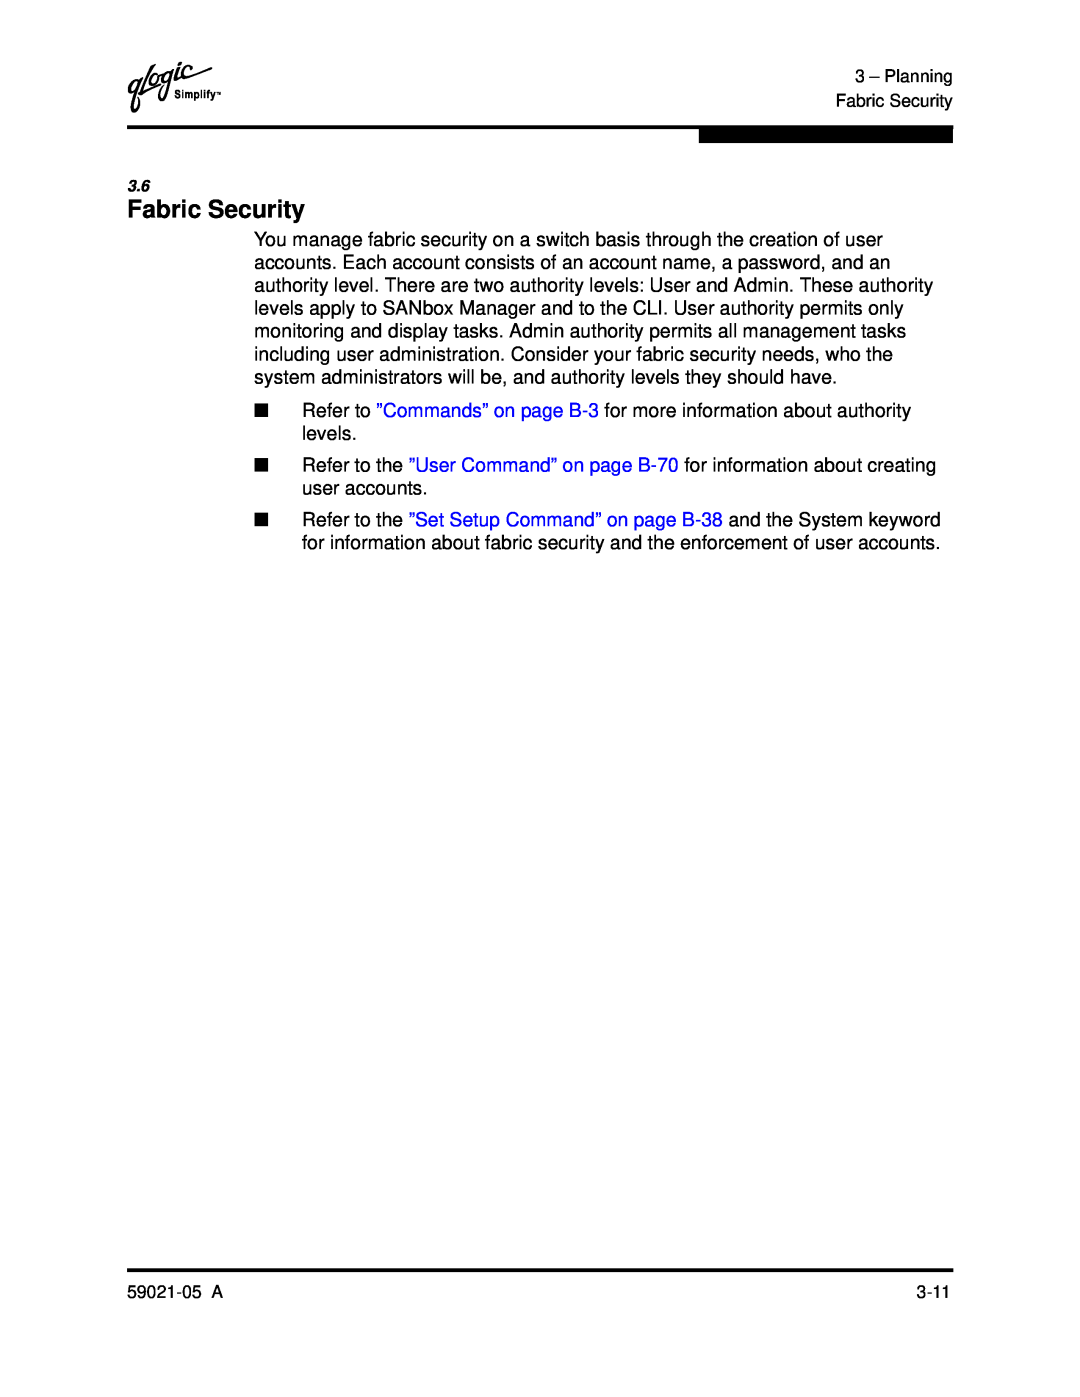 Q-Logic 59021-05 manual Fabric Security 